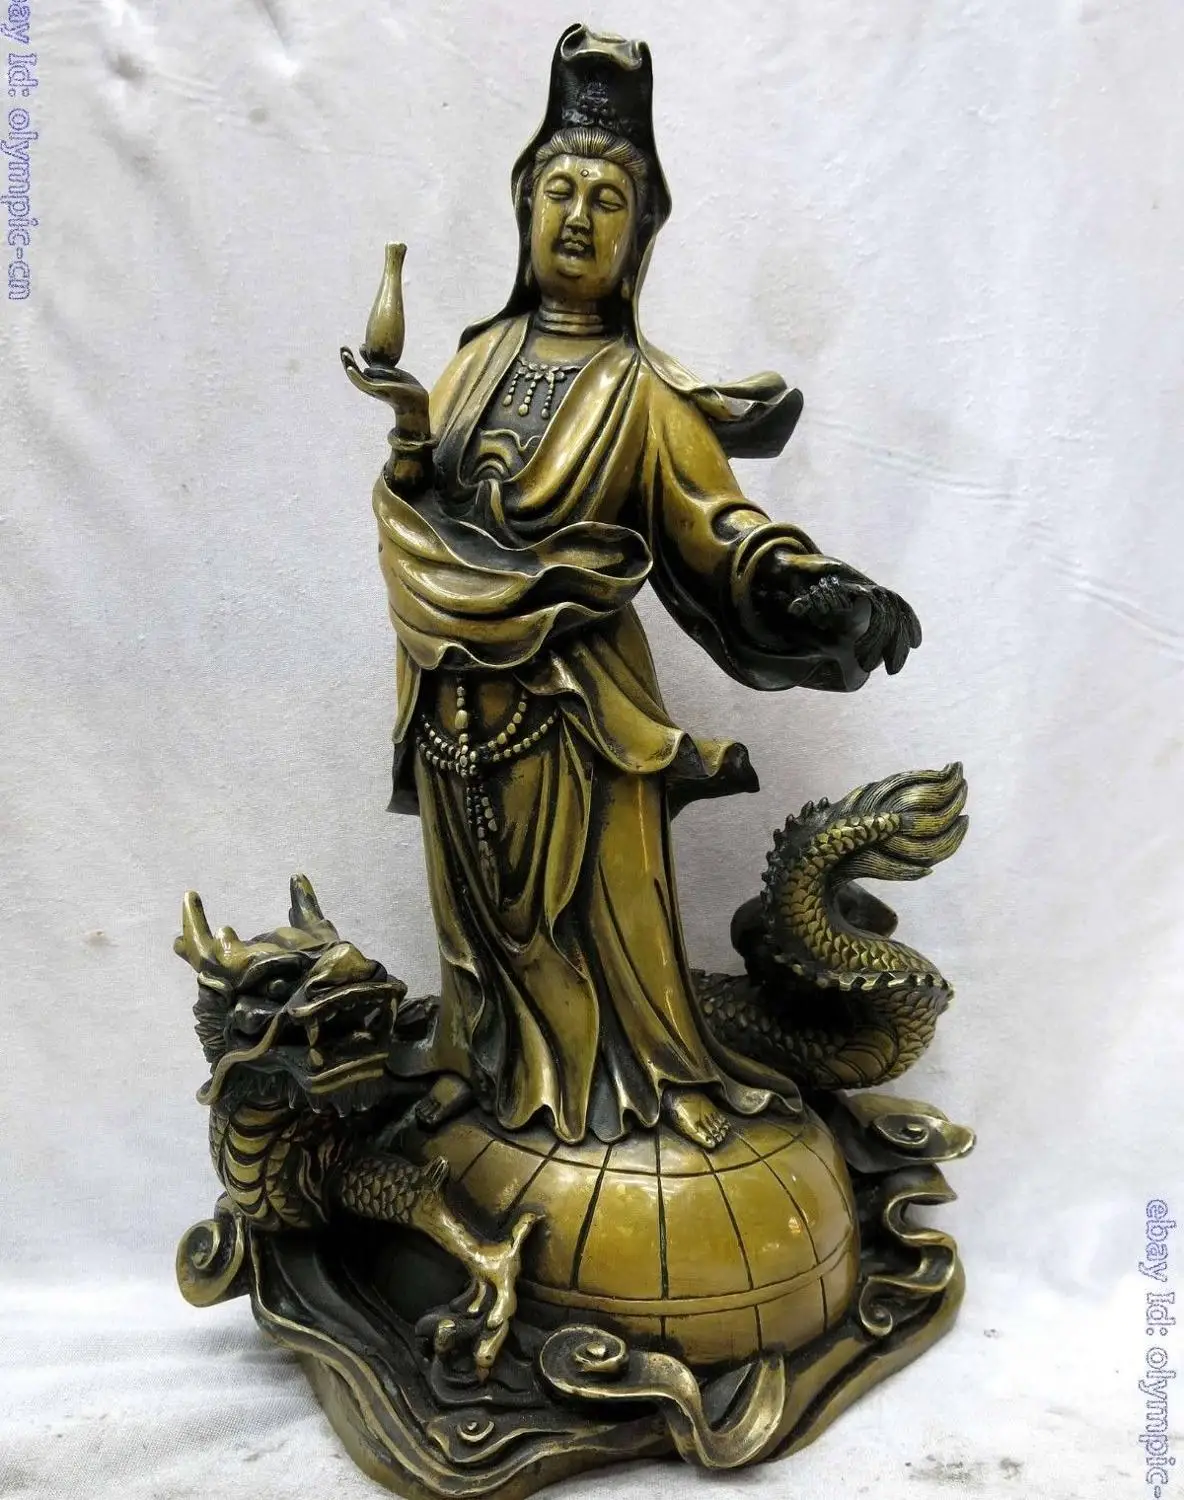 16 "Китайская латунная медная буддизм Дракон Kwan-yin Гуаньинь, Будда скульптура статуя